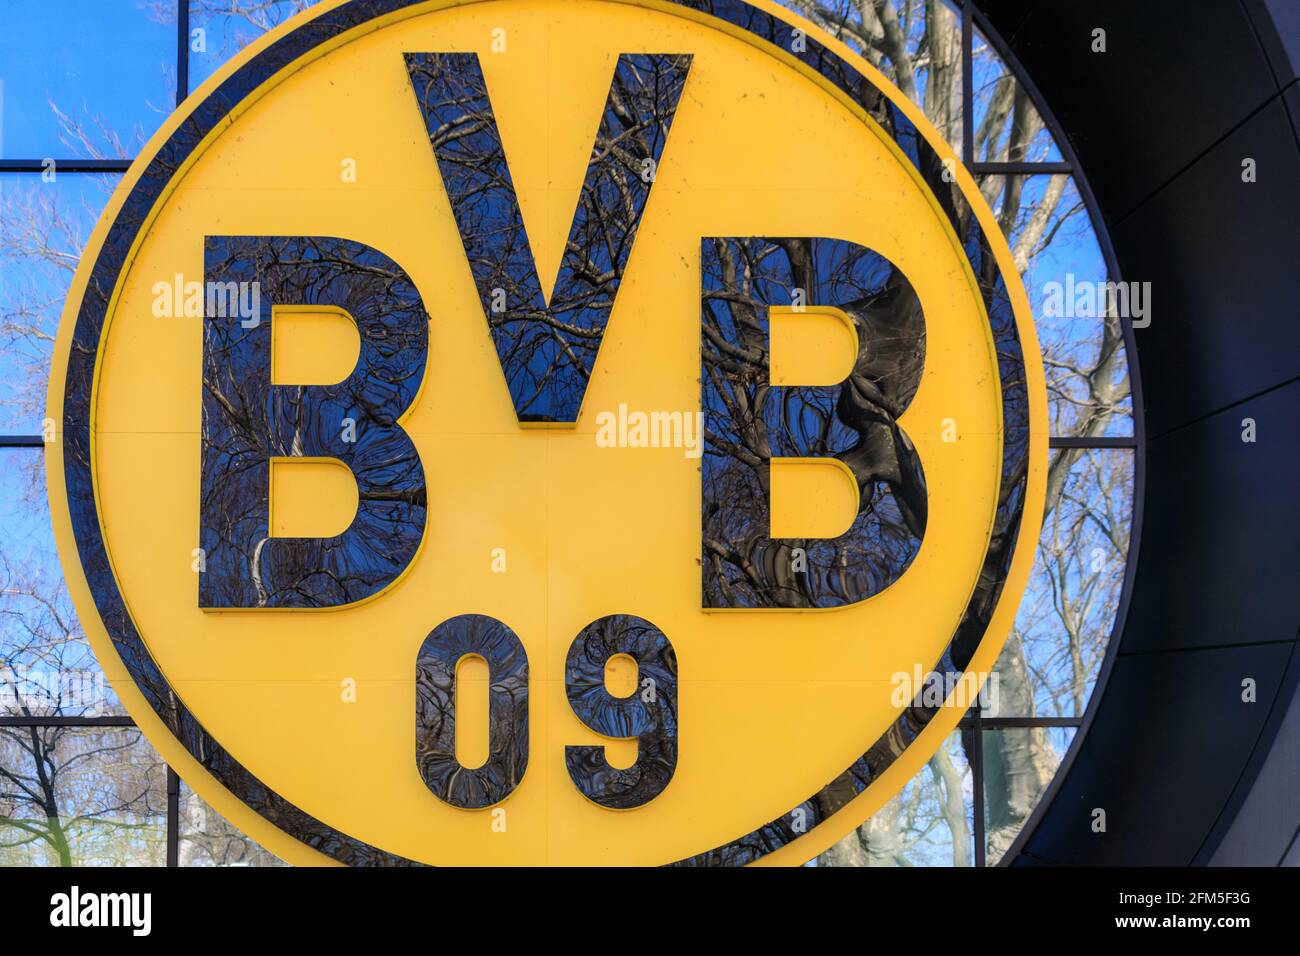 BVB 09 logo, branding of Borussia Dortmund football club, round, fan shop, Dortmund, Germany Stock Photo